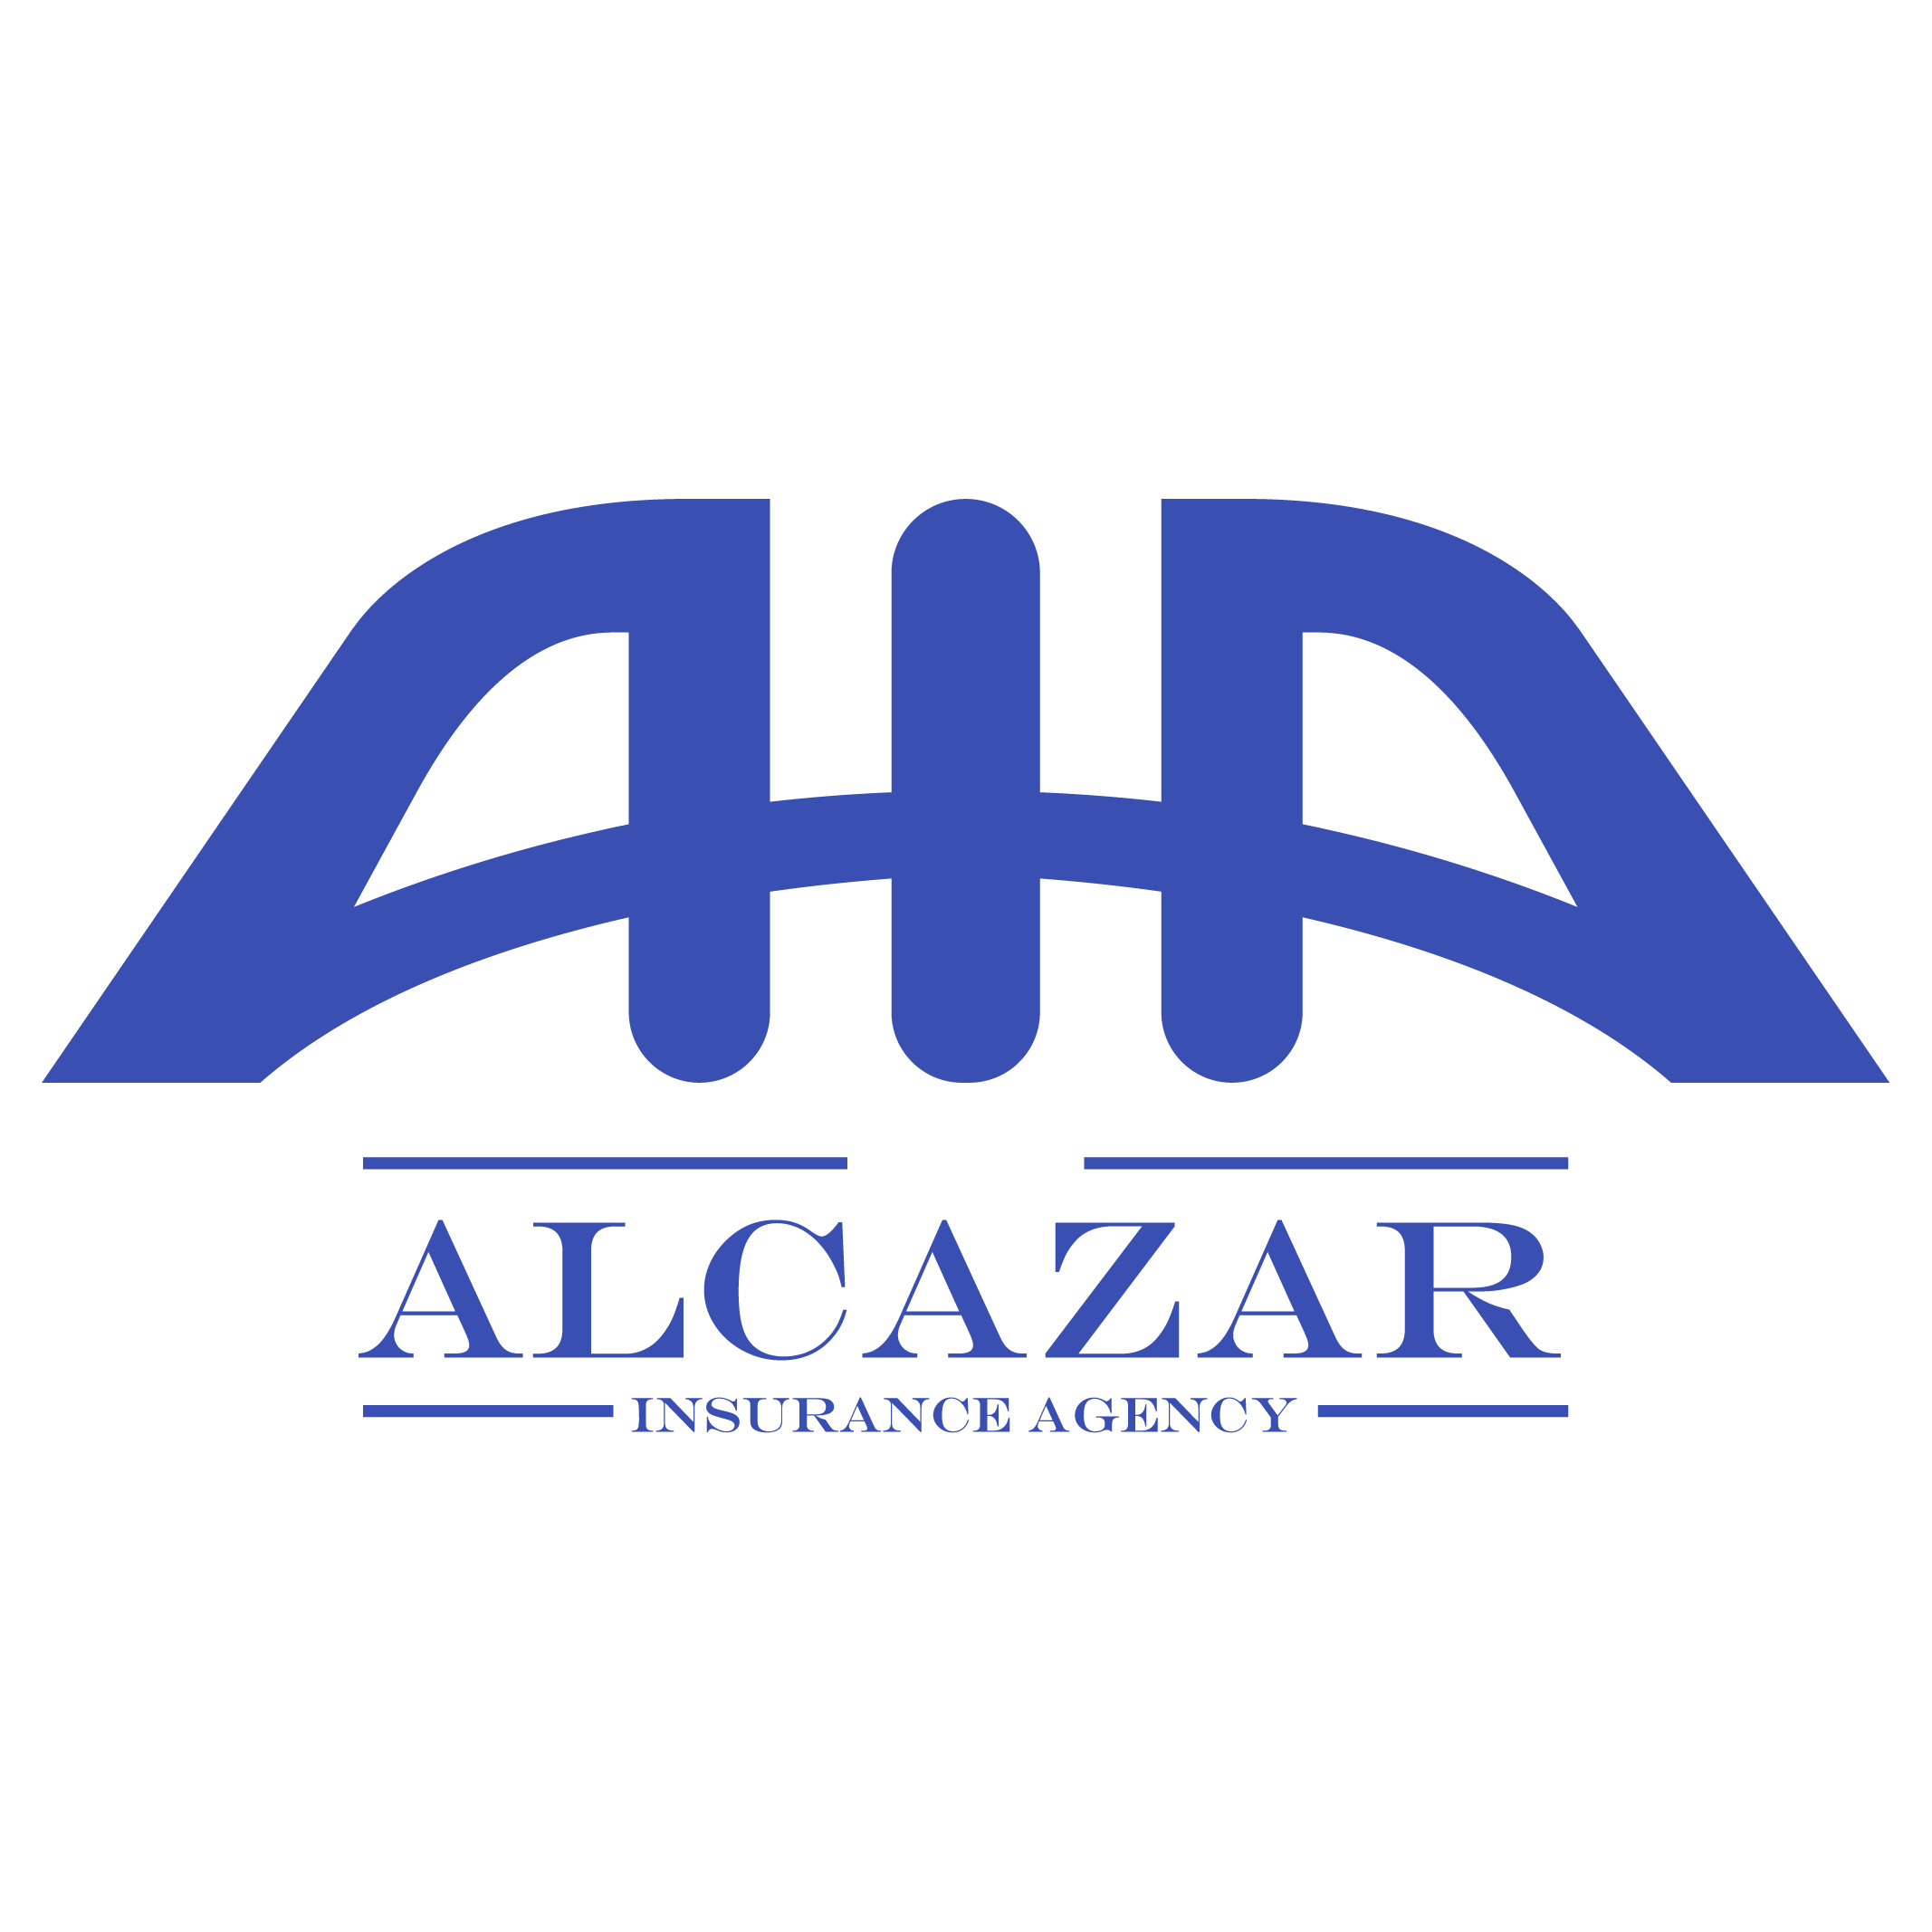 Alcazar Insurance Agency